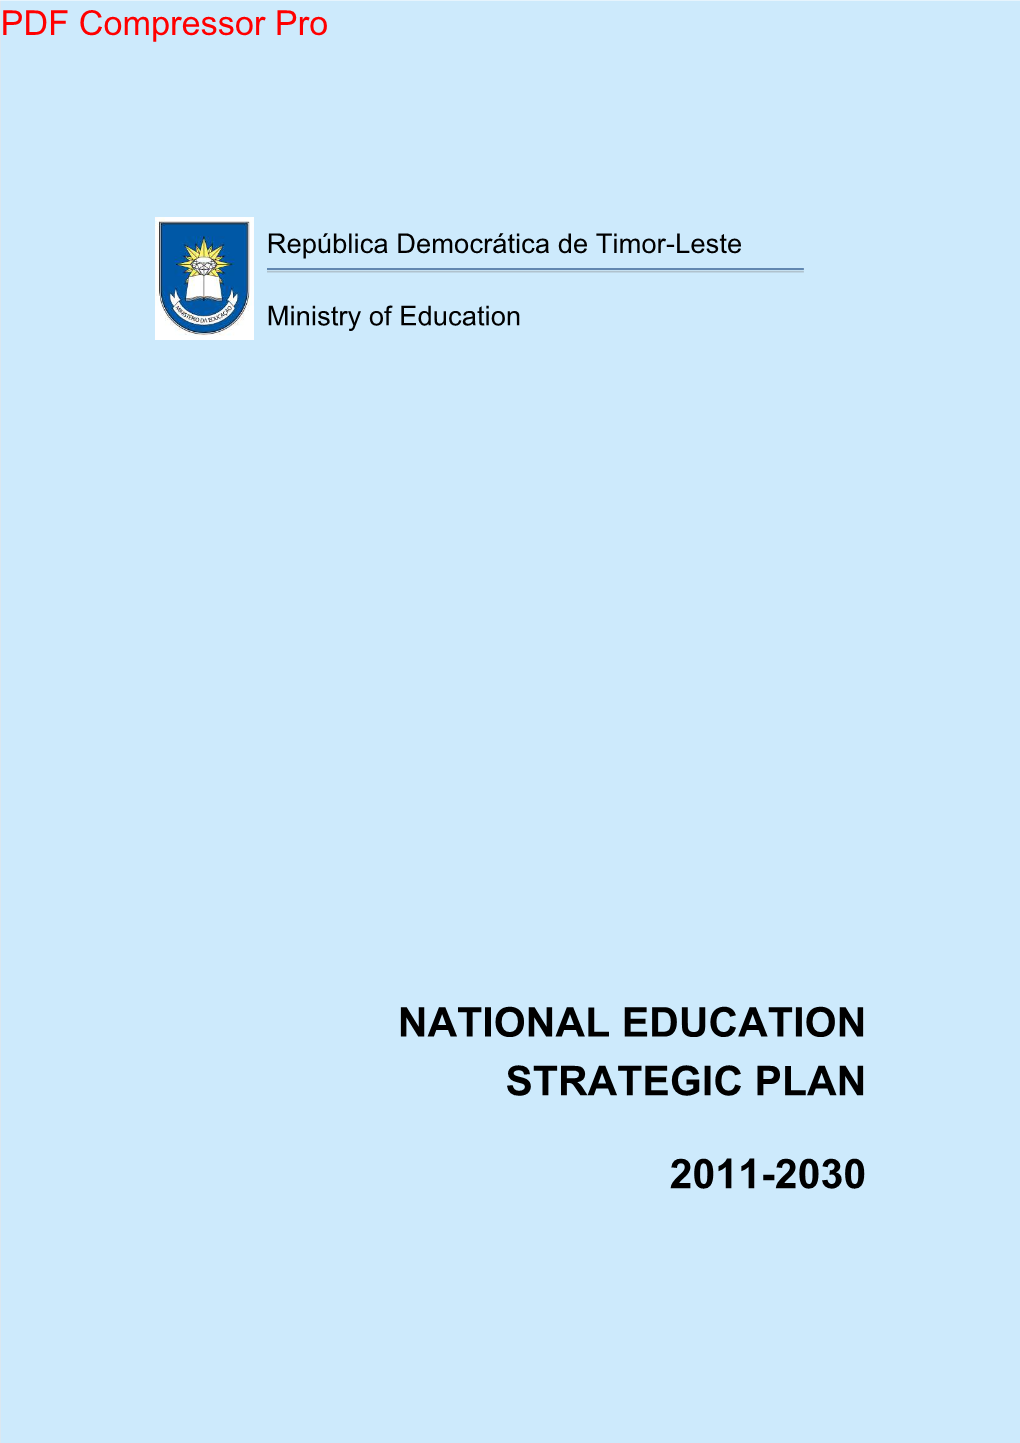 National Education Strategic Plan 2011-2030